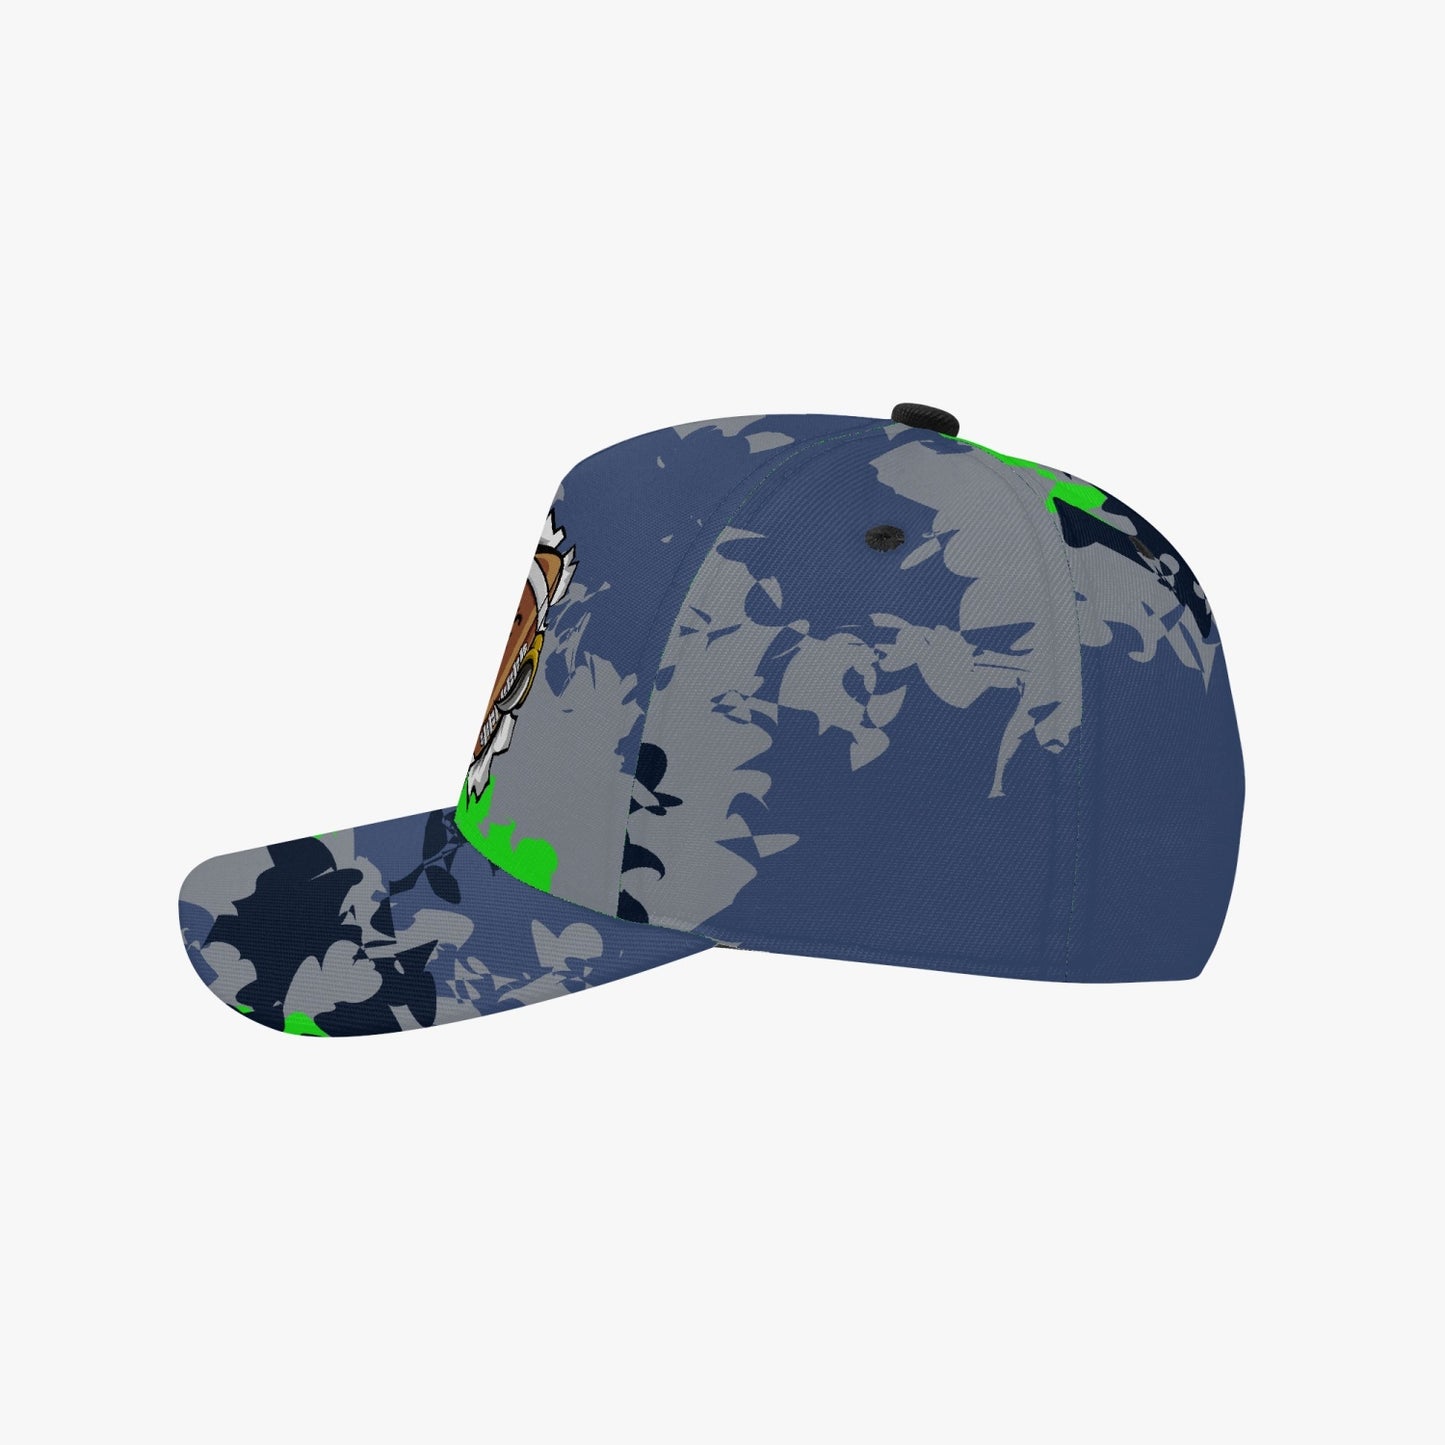 Kicxs Seahawks Camouflage Cap